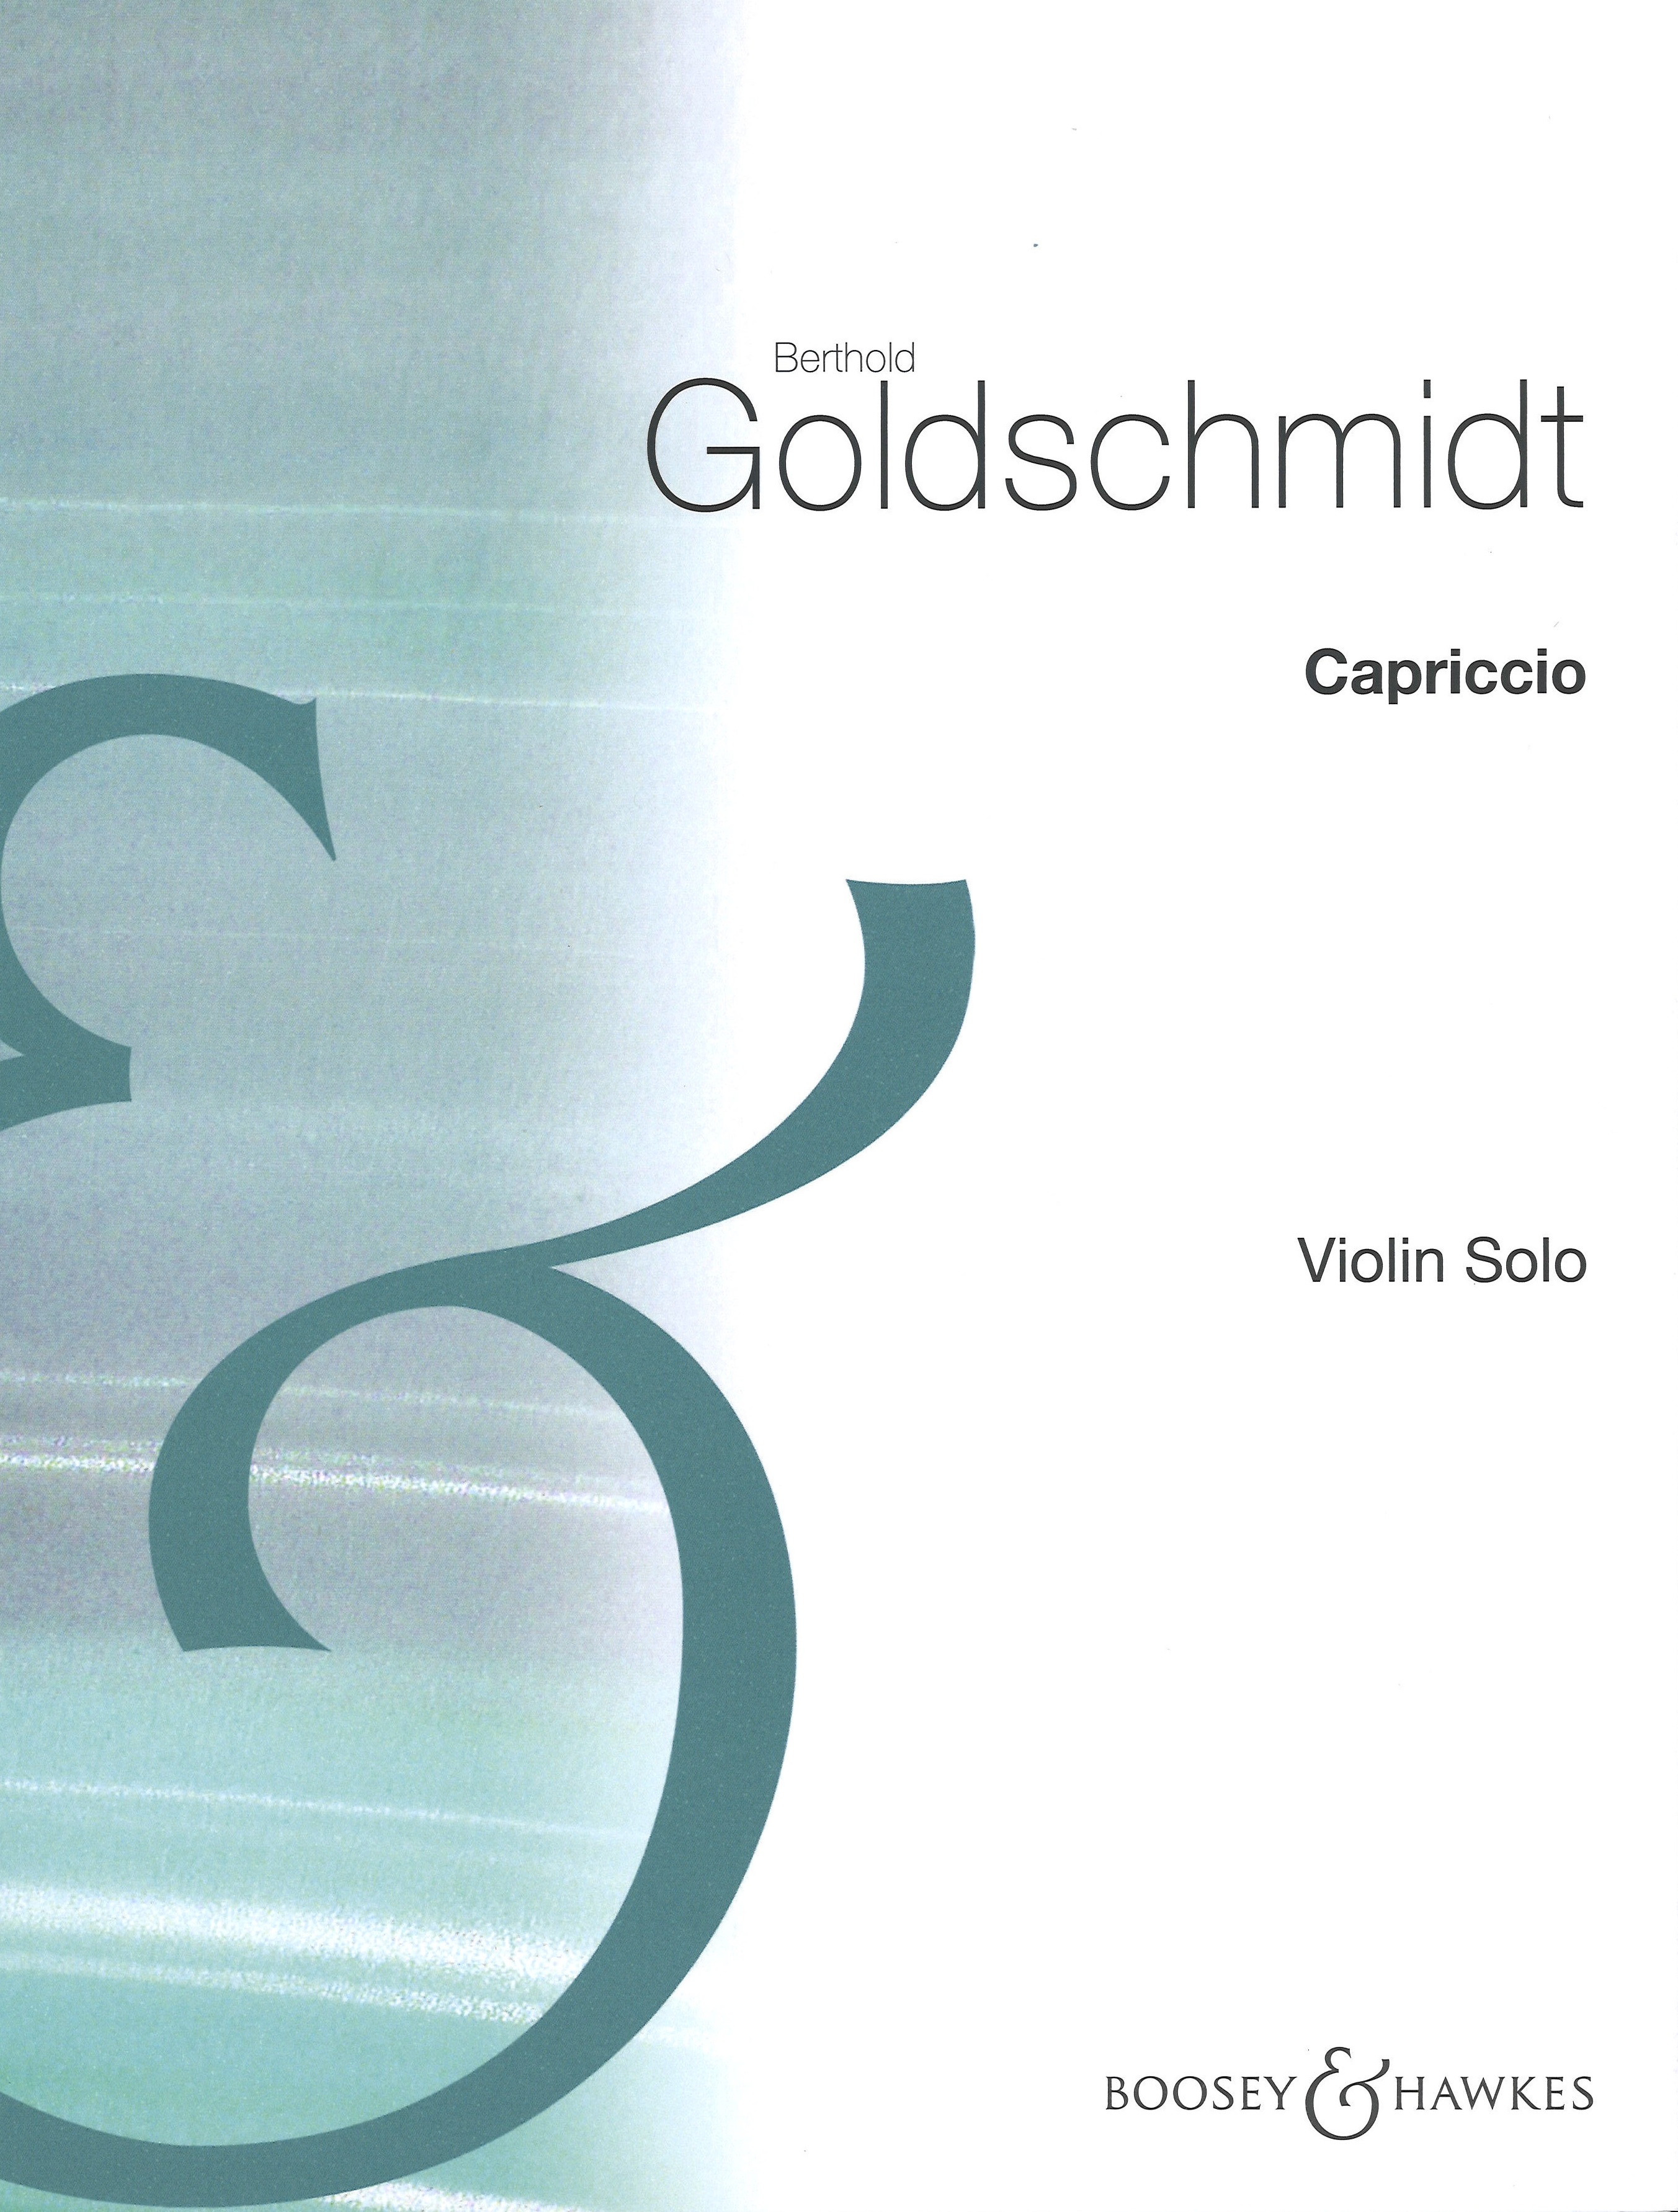 Goldschmidt Capriccio Violin Solo Sheet Music Songbook